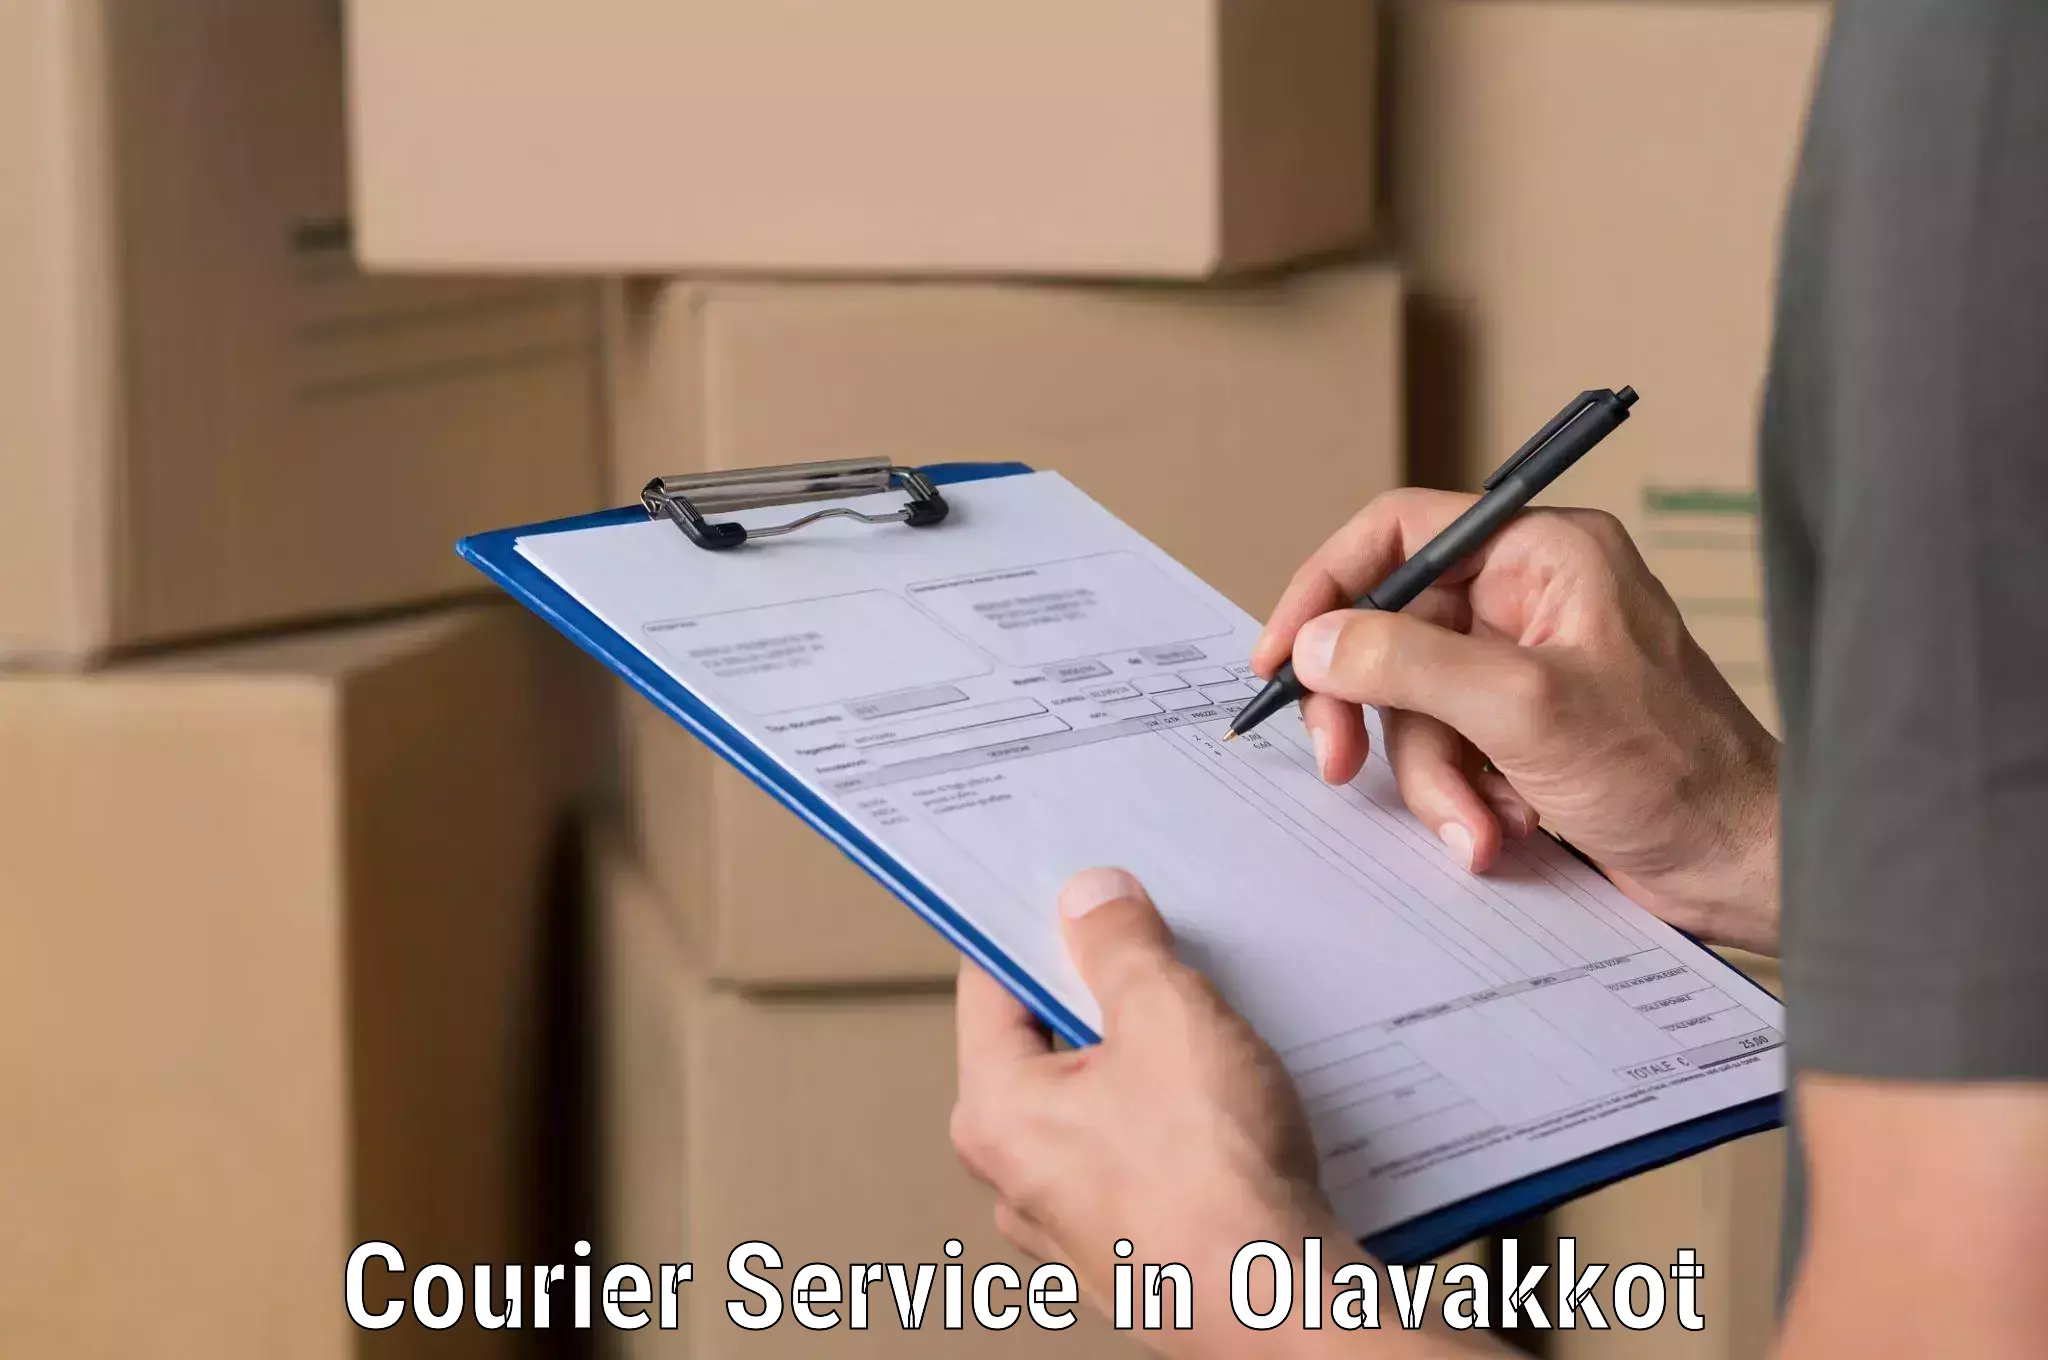 Express postal services in Olavakkot